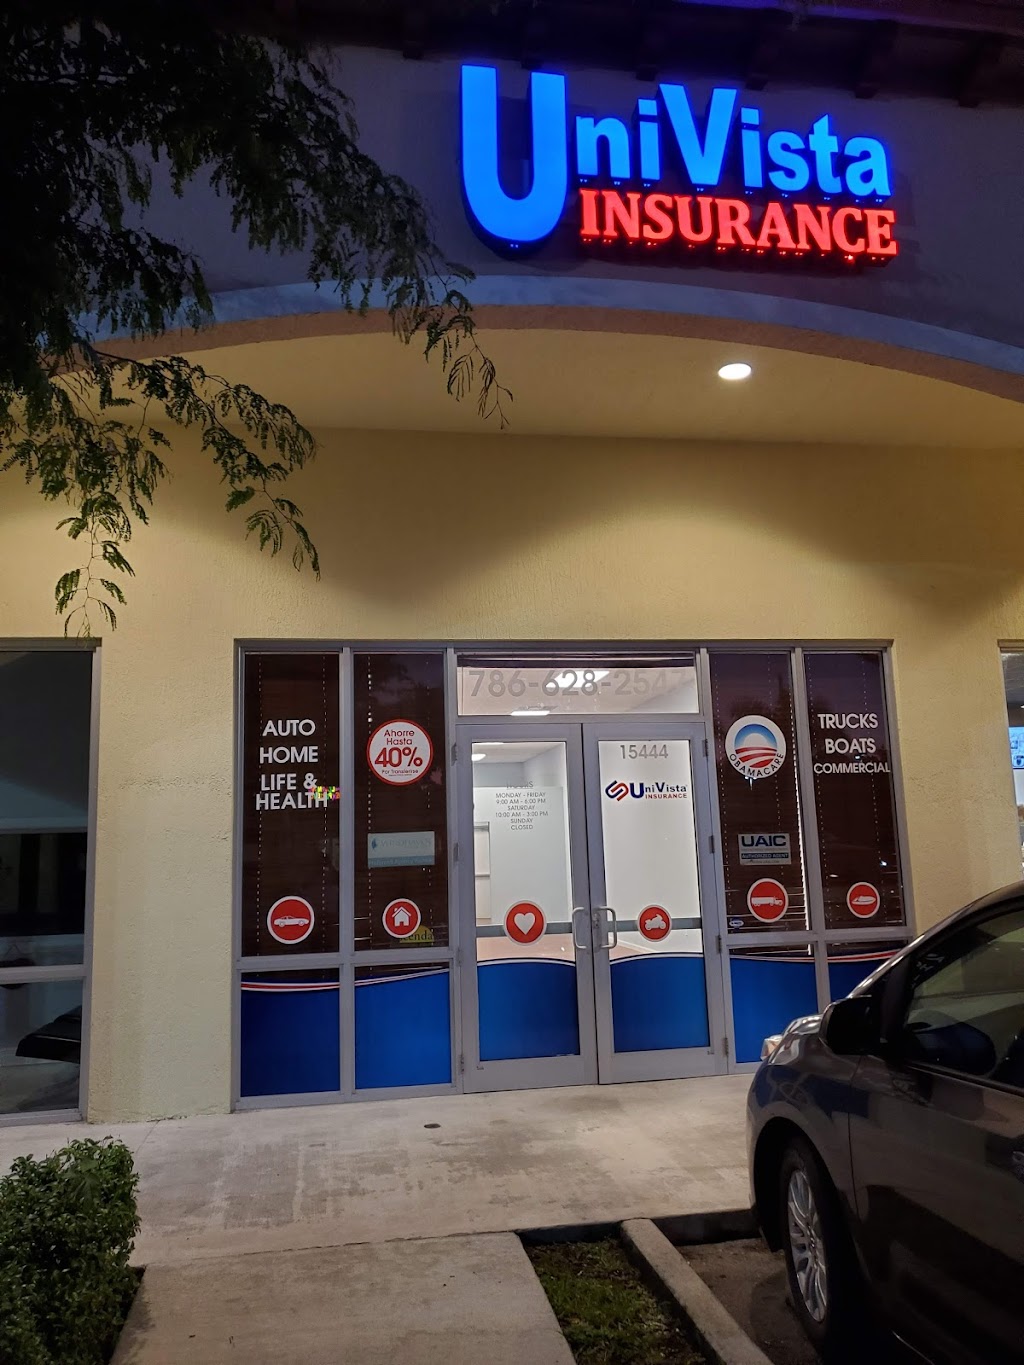 Univista Insurance | 10201 Hammocks Blvd Unit 158, Miami, FL 33196, USA | Phone: (786) 628-2547